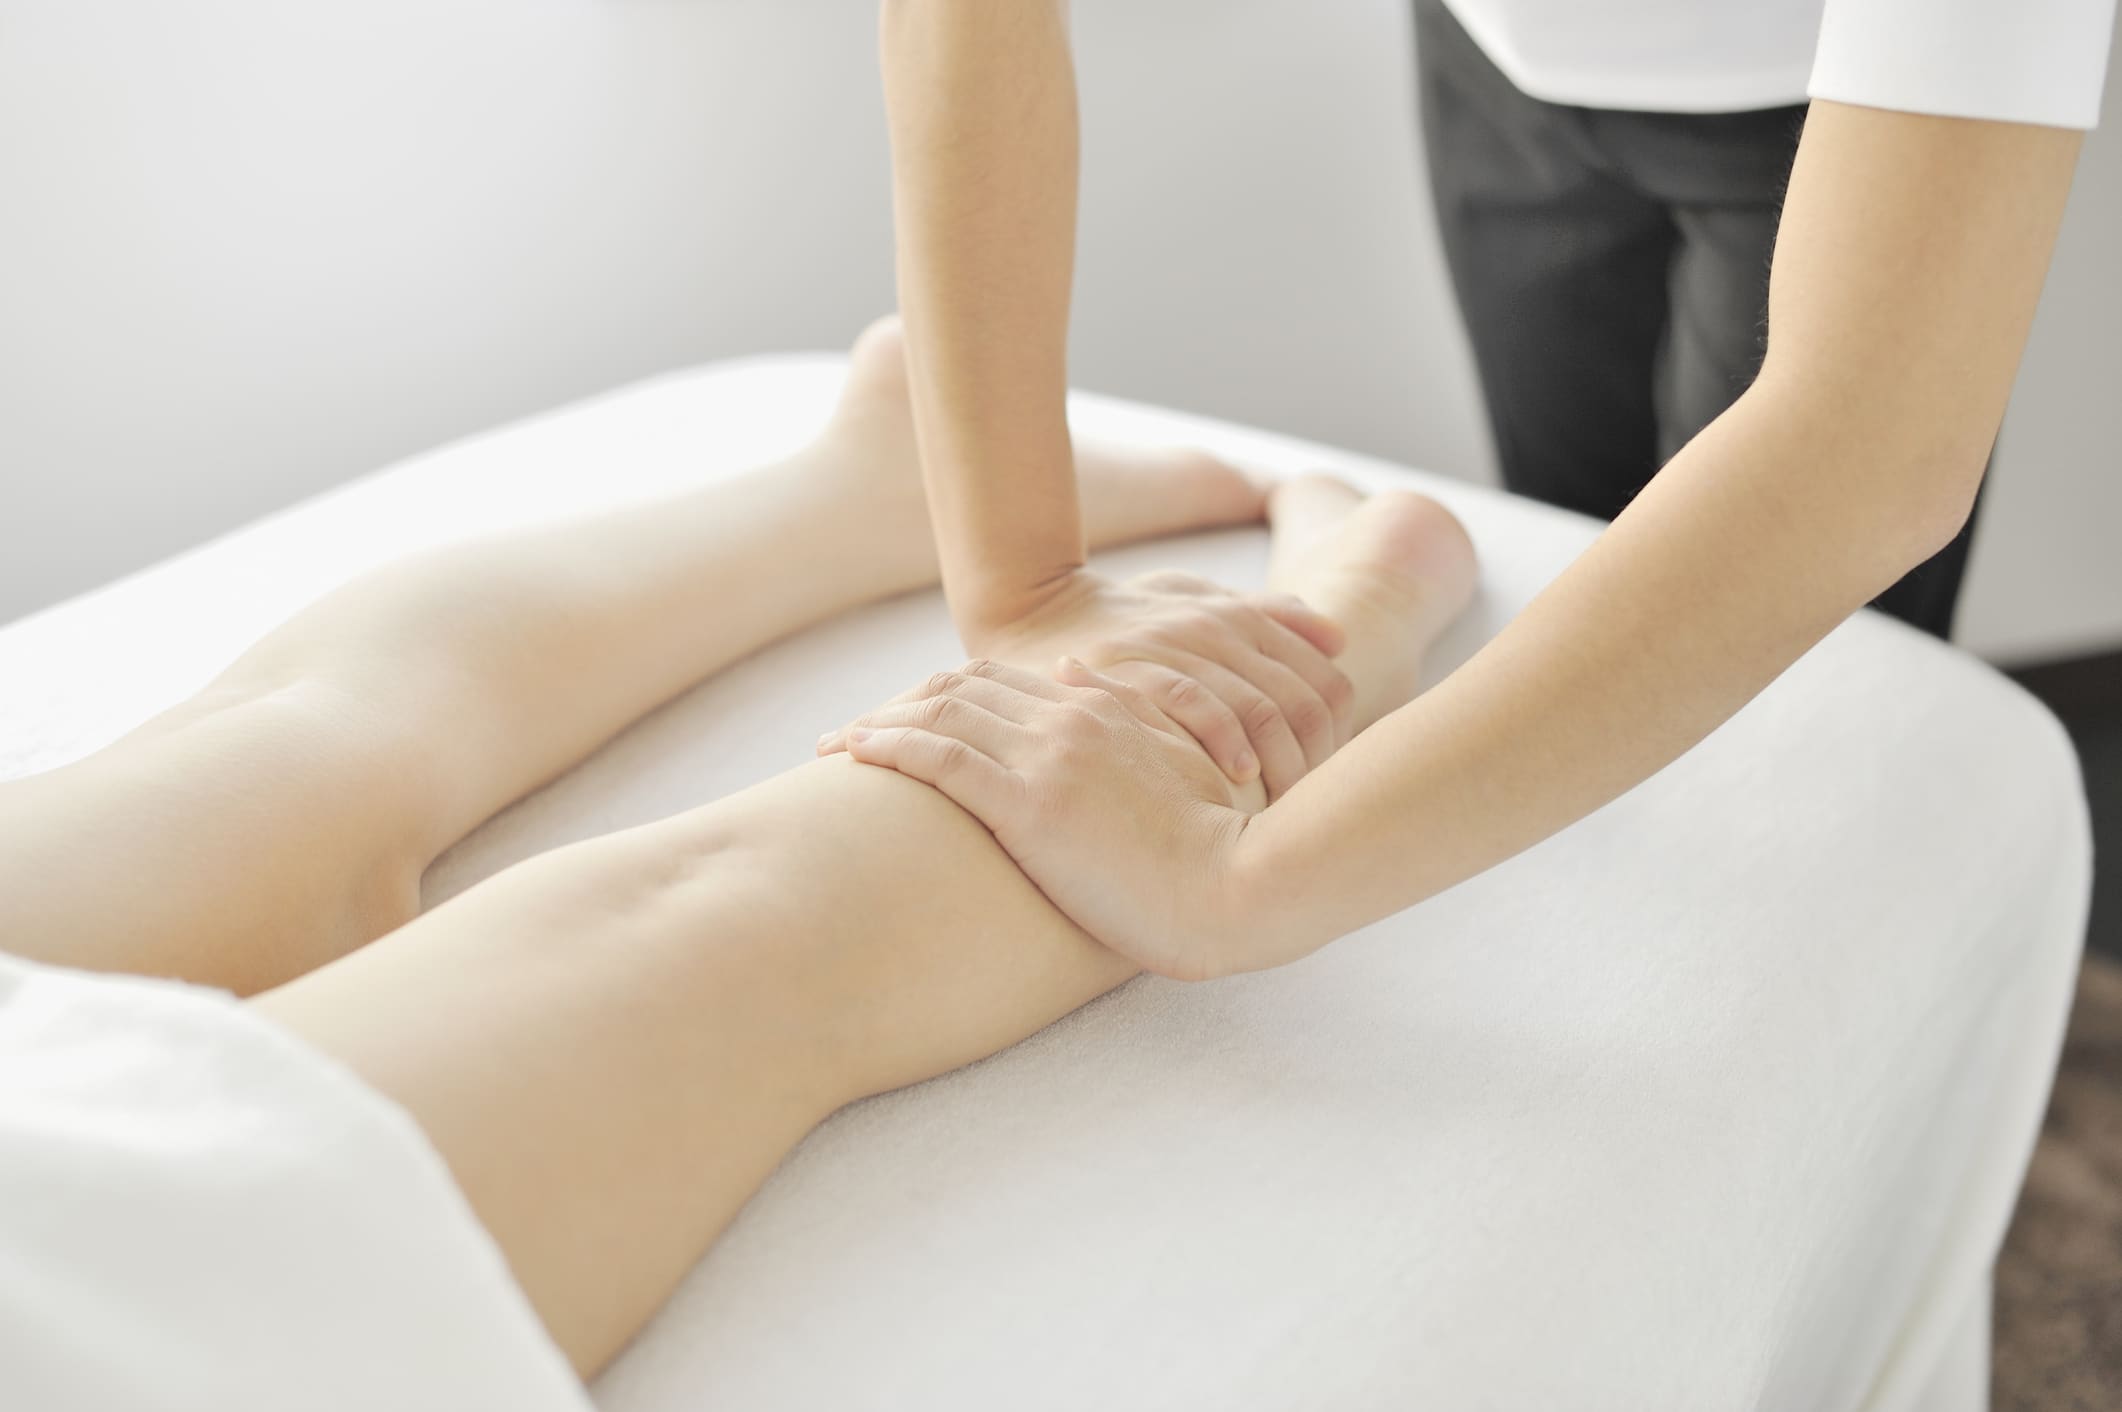 A person receives a massage